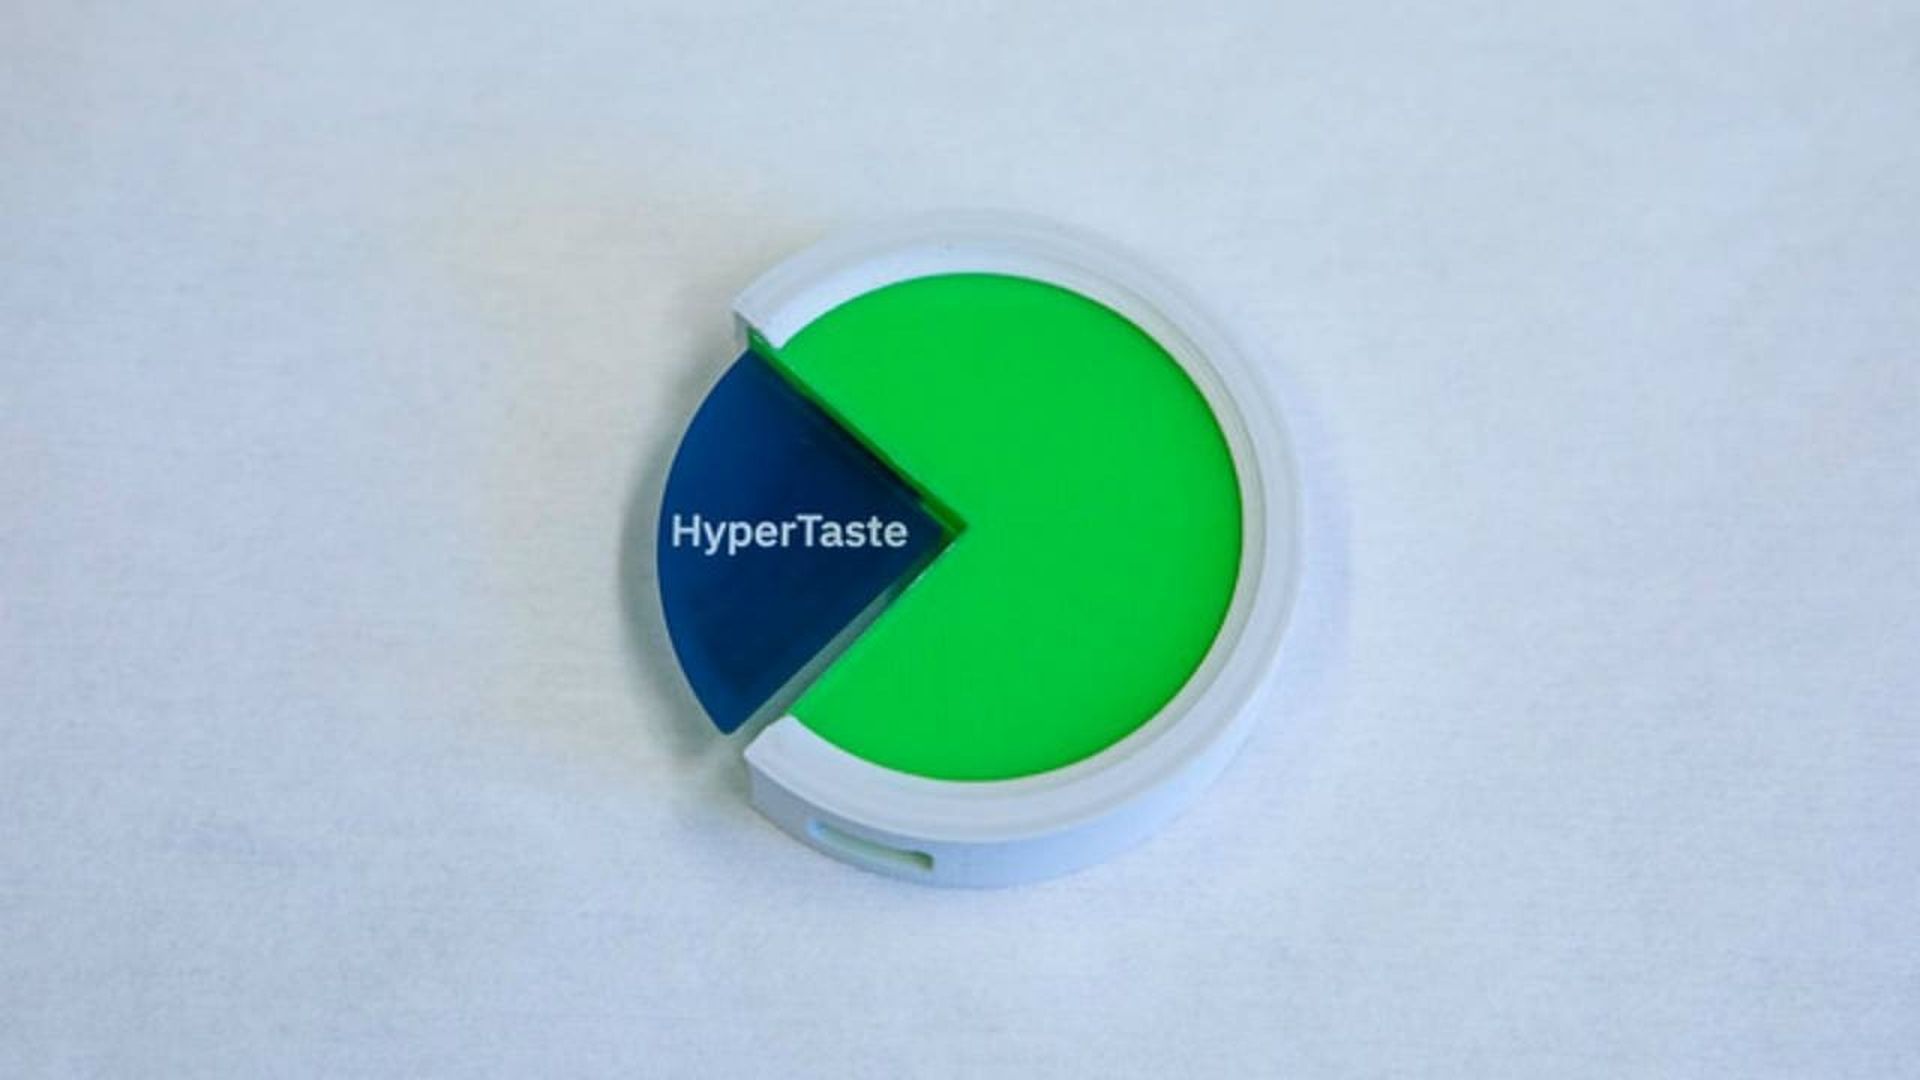 IBM Research scientists developed HyperTaste, a chemical taste sensing tool.